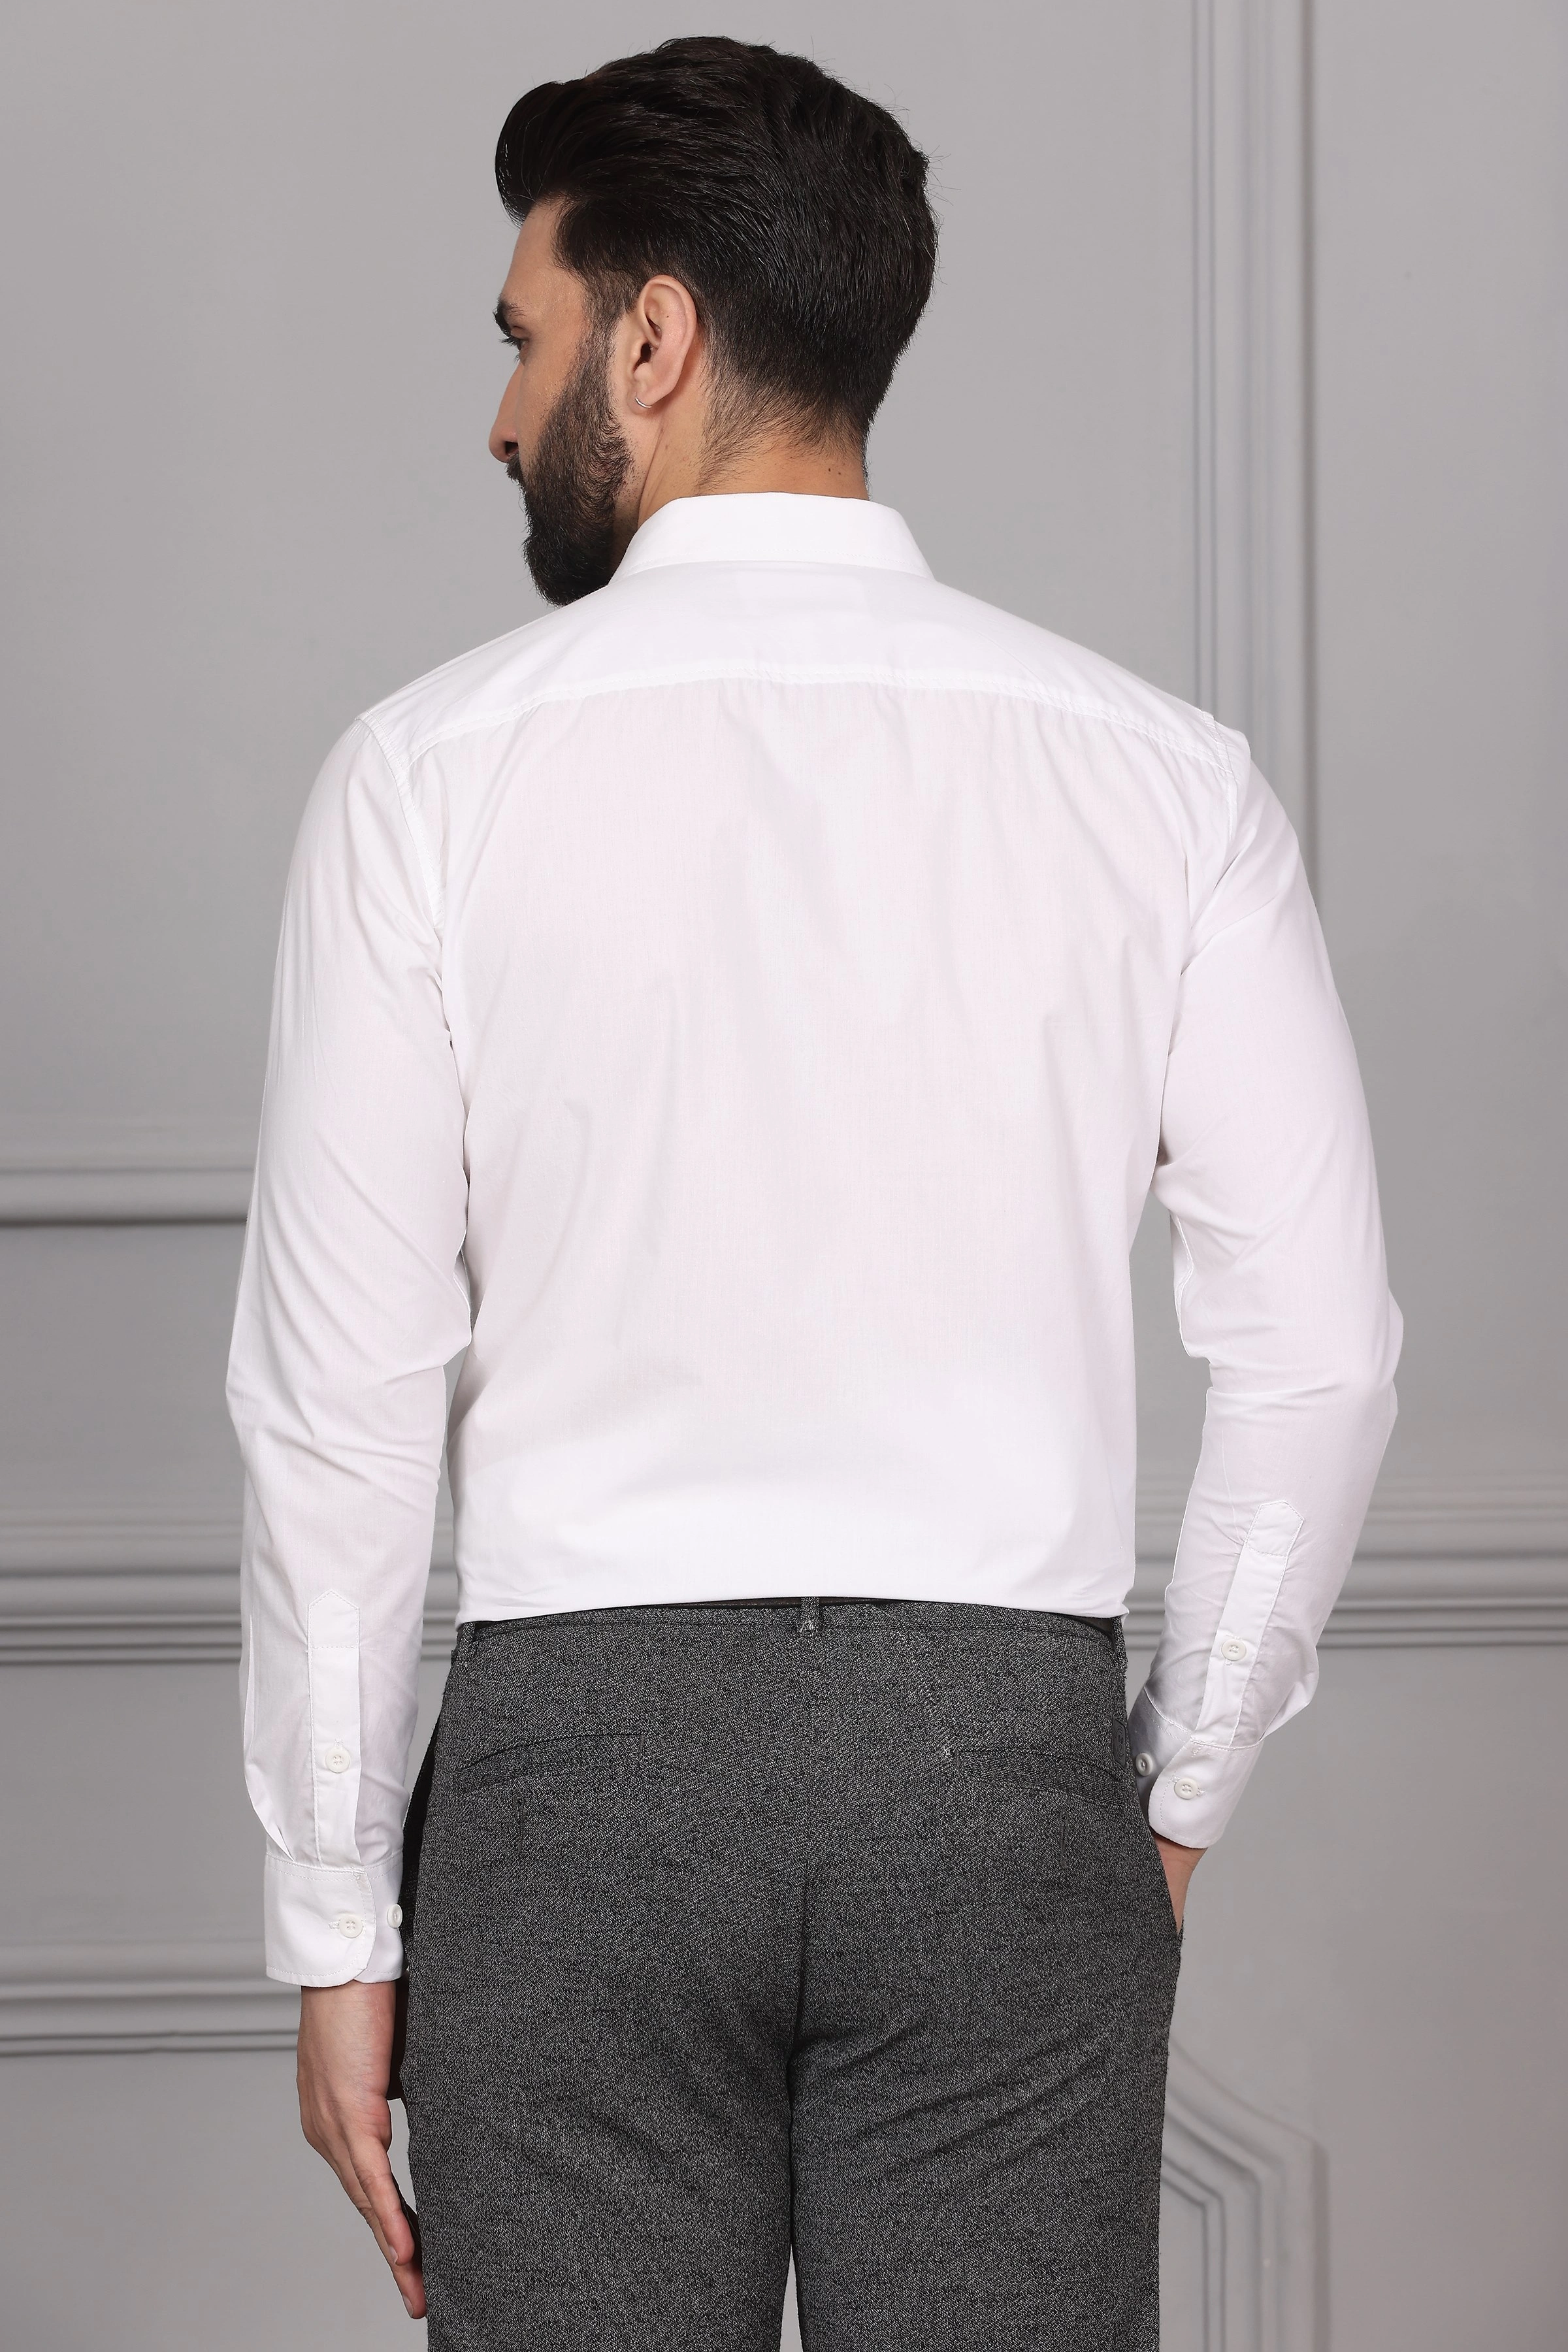 White Formal Cotton Shirt-S-7